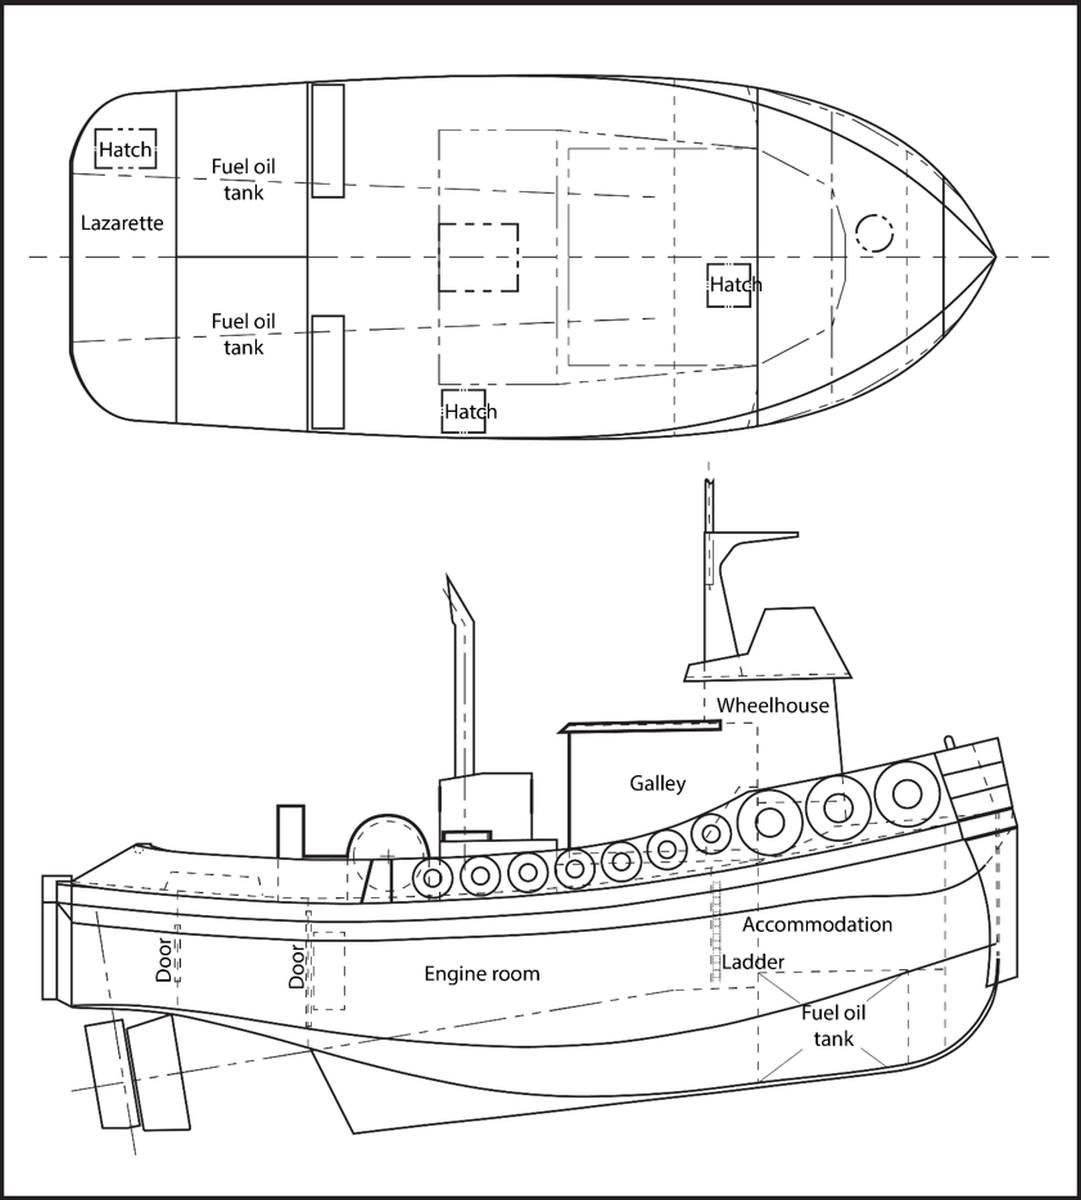 Appendix A – General arrangement of the Ocean Monarch (overhead and profile views)